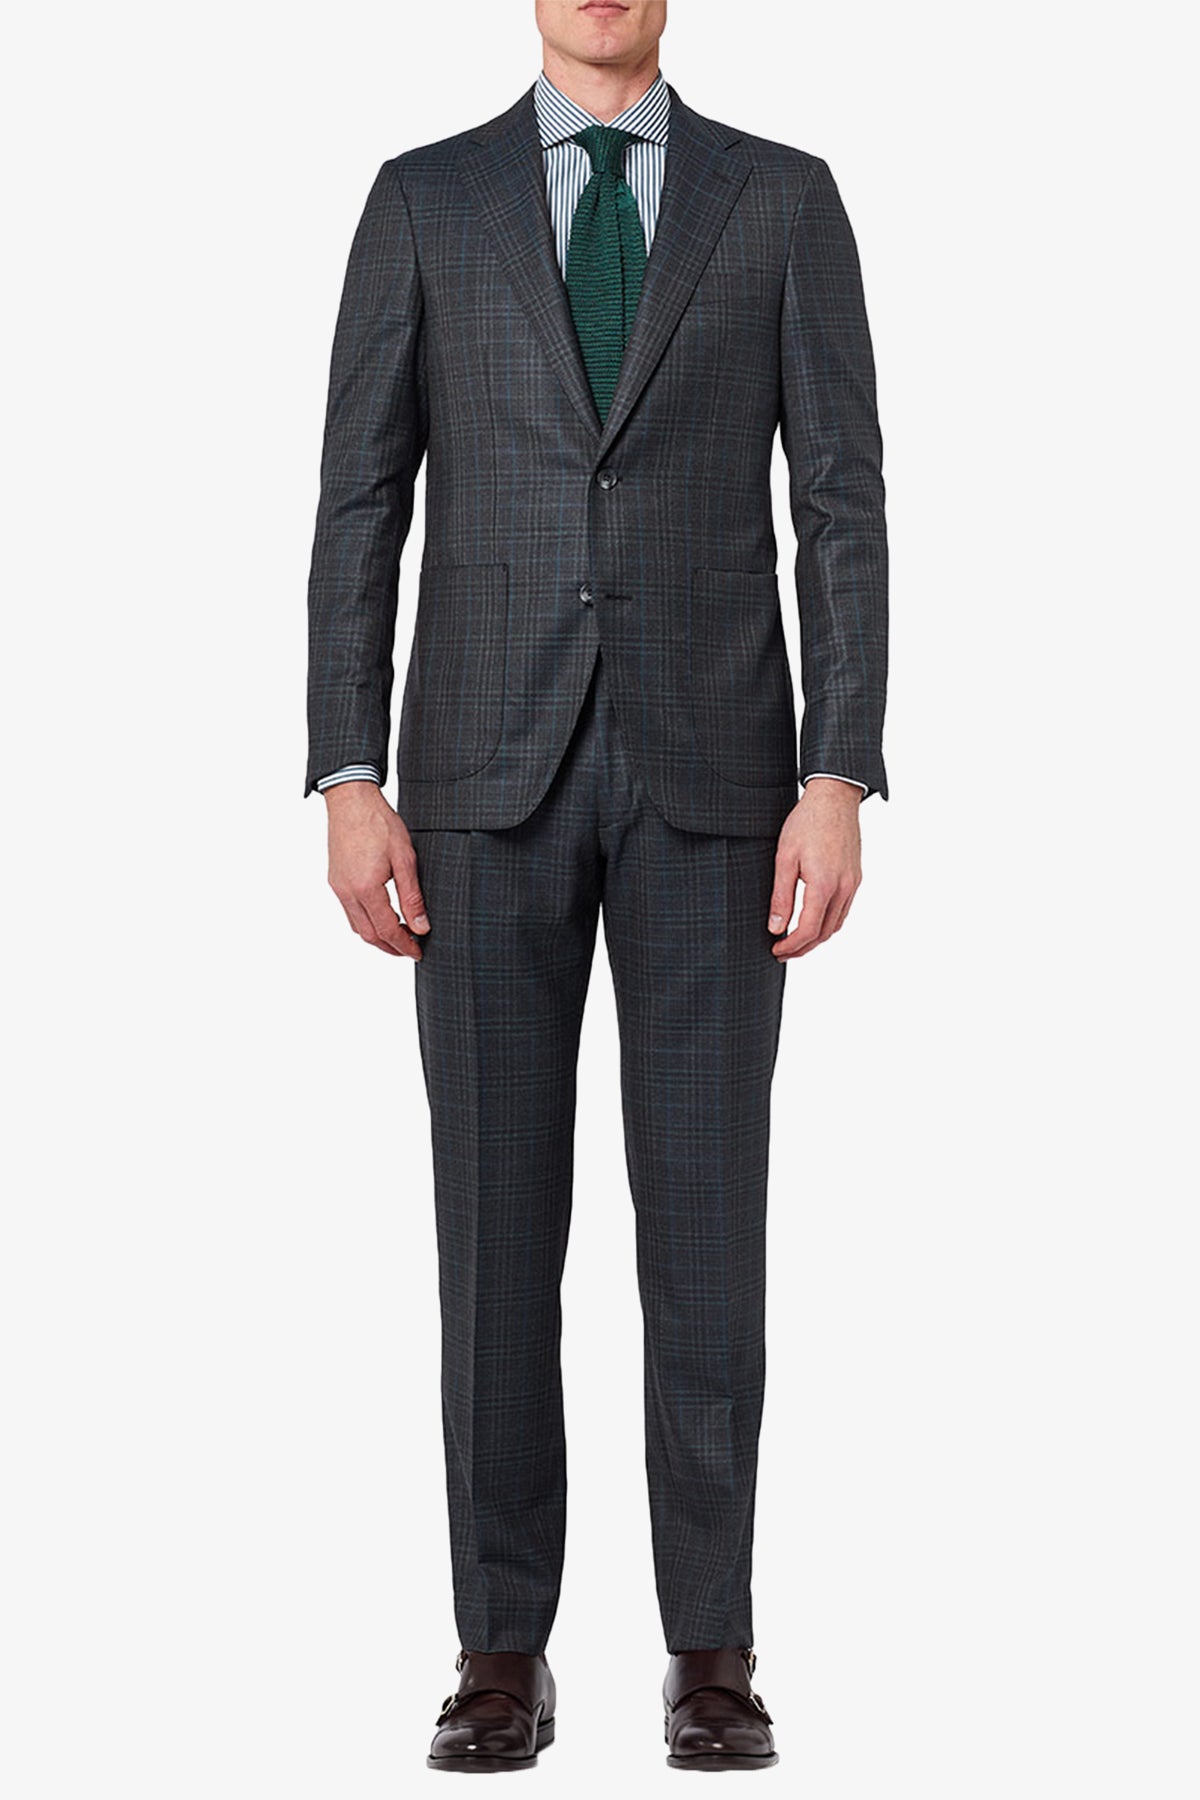 Henderson -  Charcoal Suit